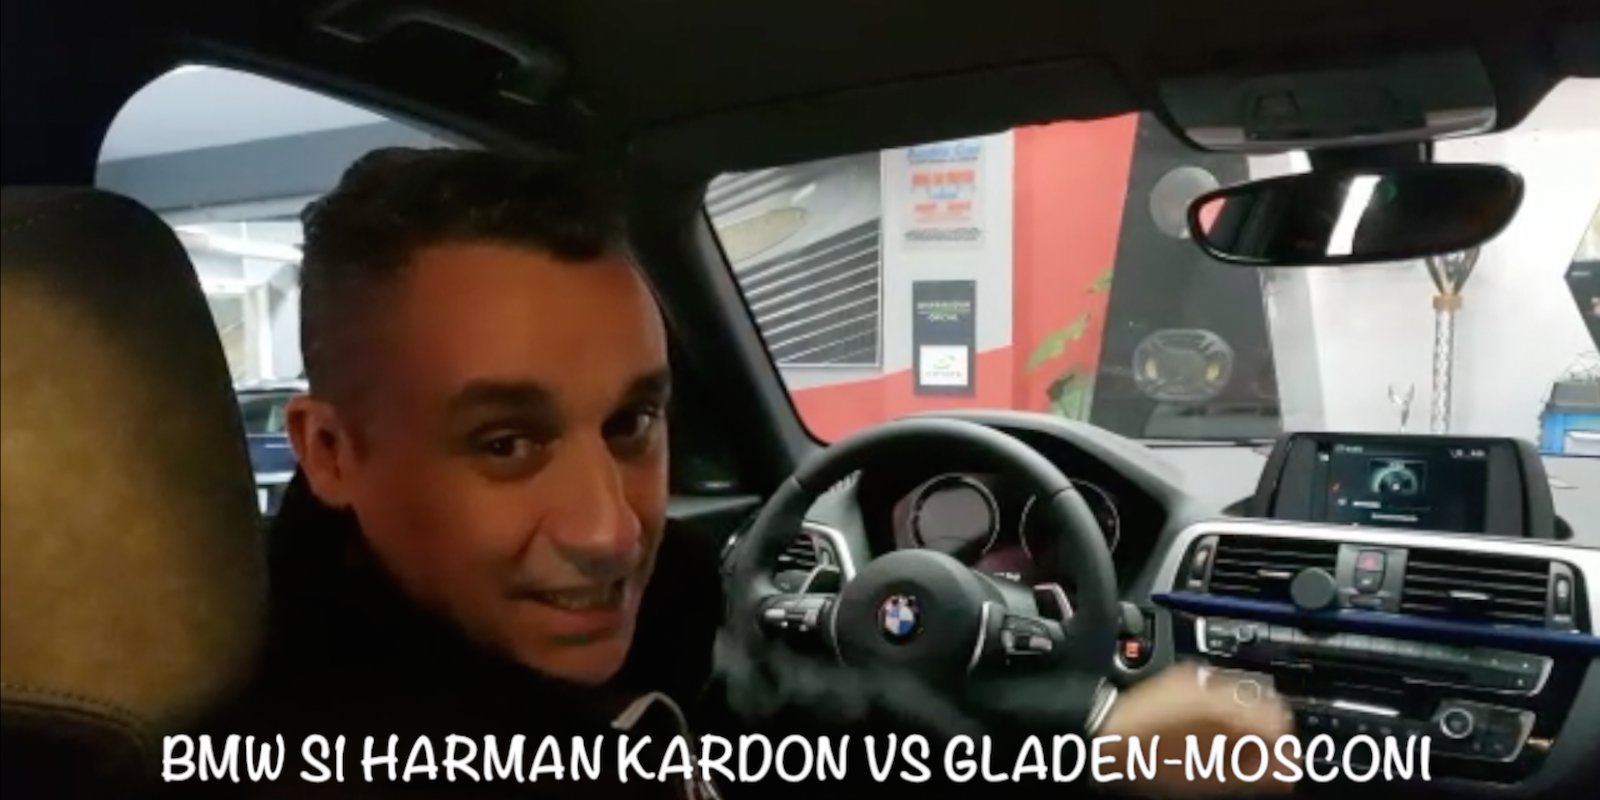 BMW Serie 1 Harman Kardon vs Gladen-Mosconi